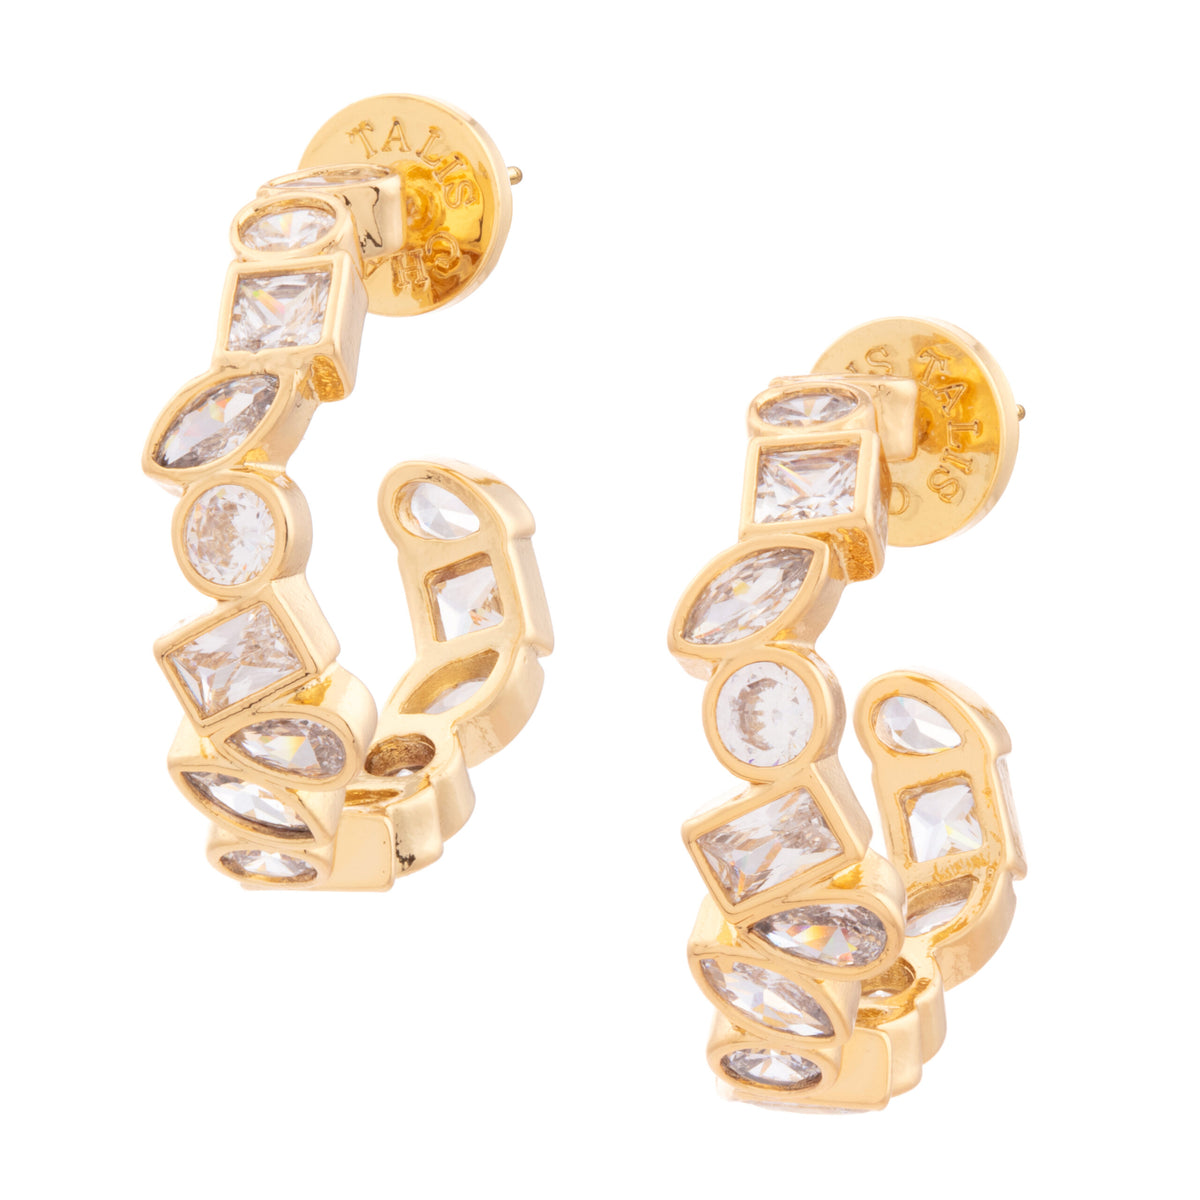 Gold cased cubic zarconic hoop earrings with butterfly fastening